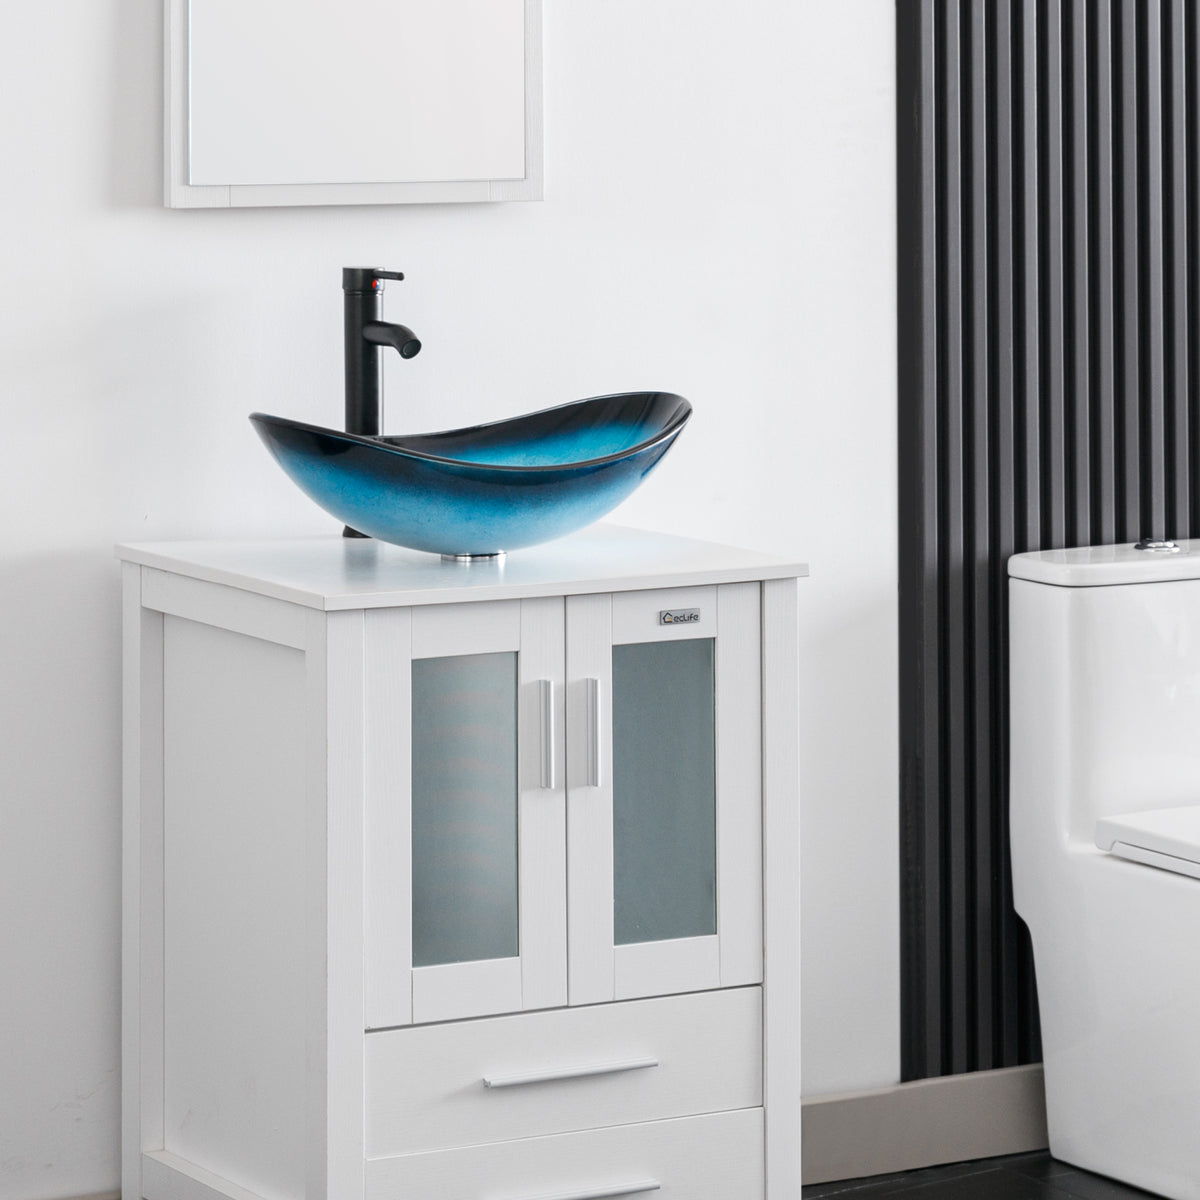 eclife 21.5" Bathroom Vessel Sink Modern Artistic Tempered Glass Basin Countertop Bowl Sink